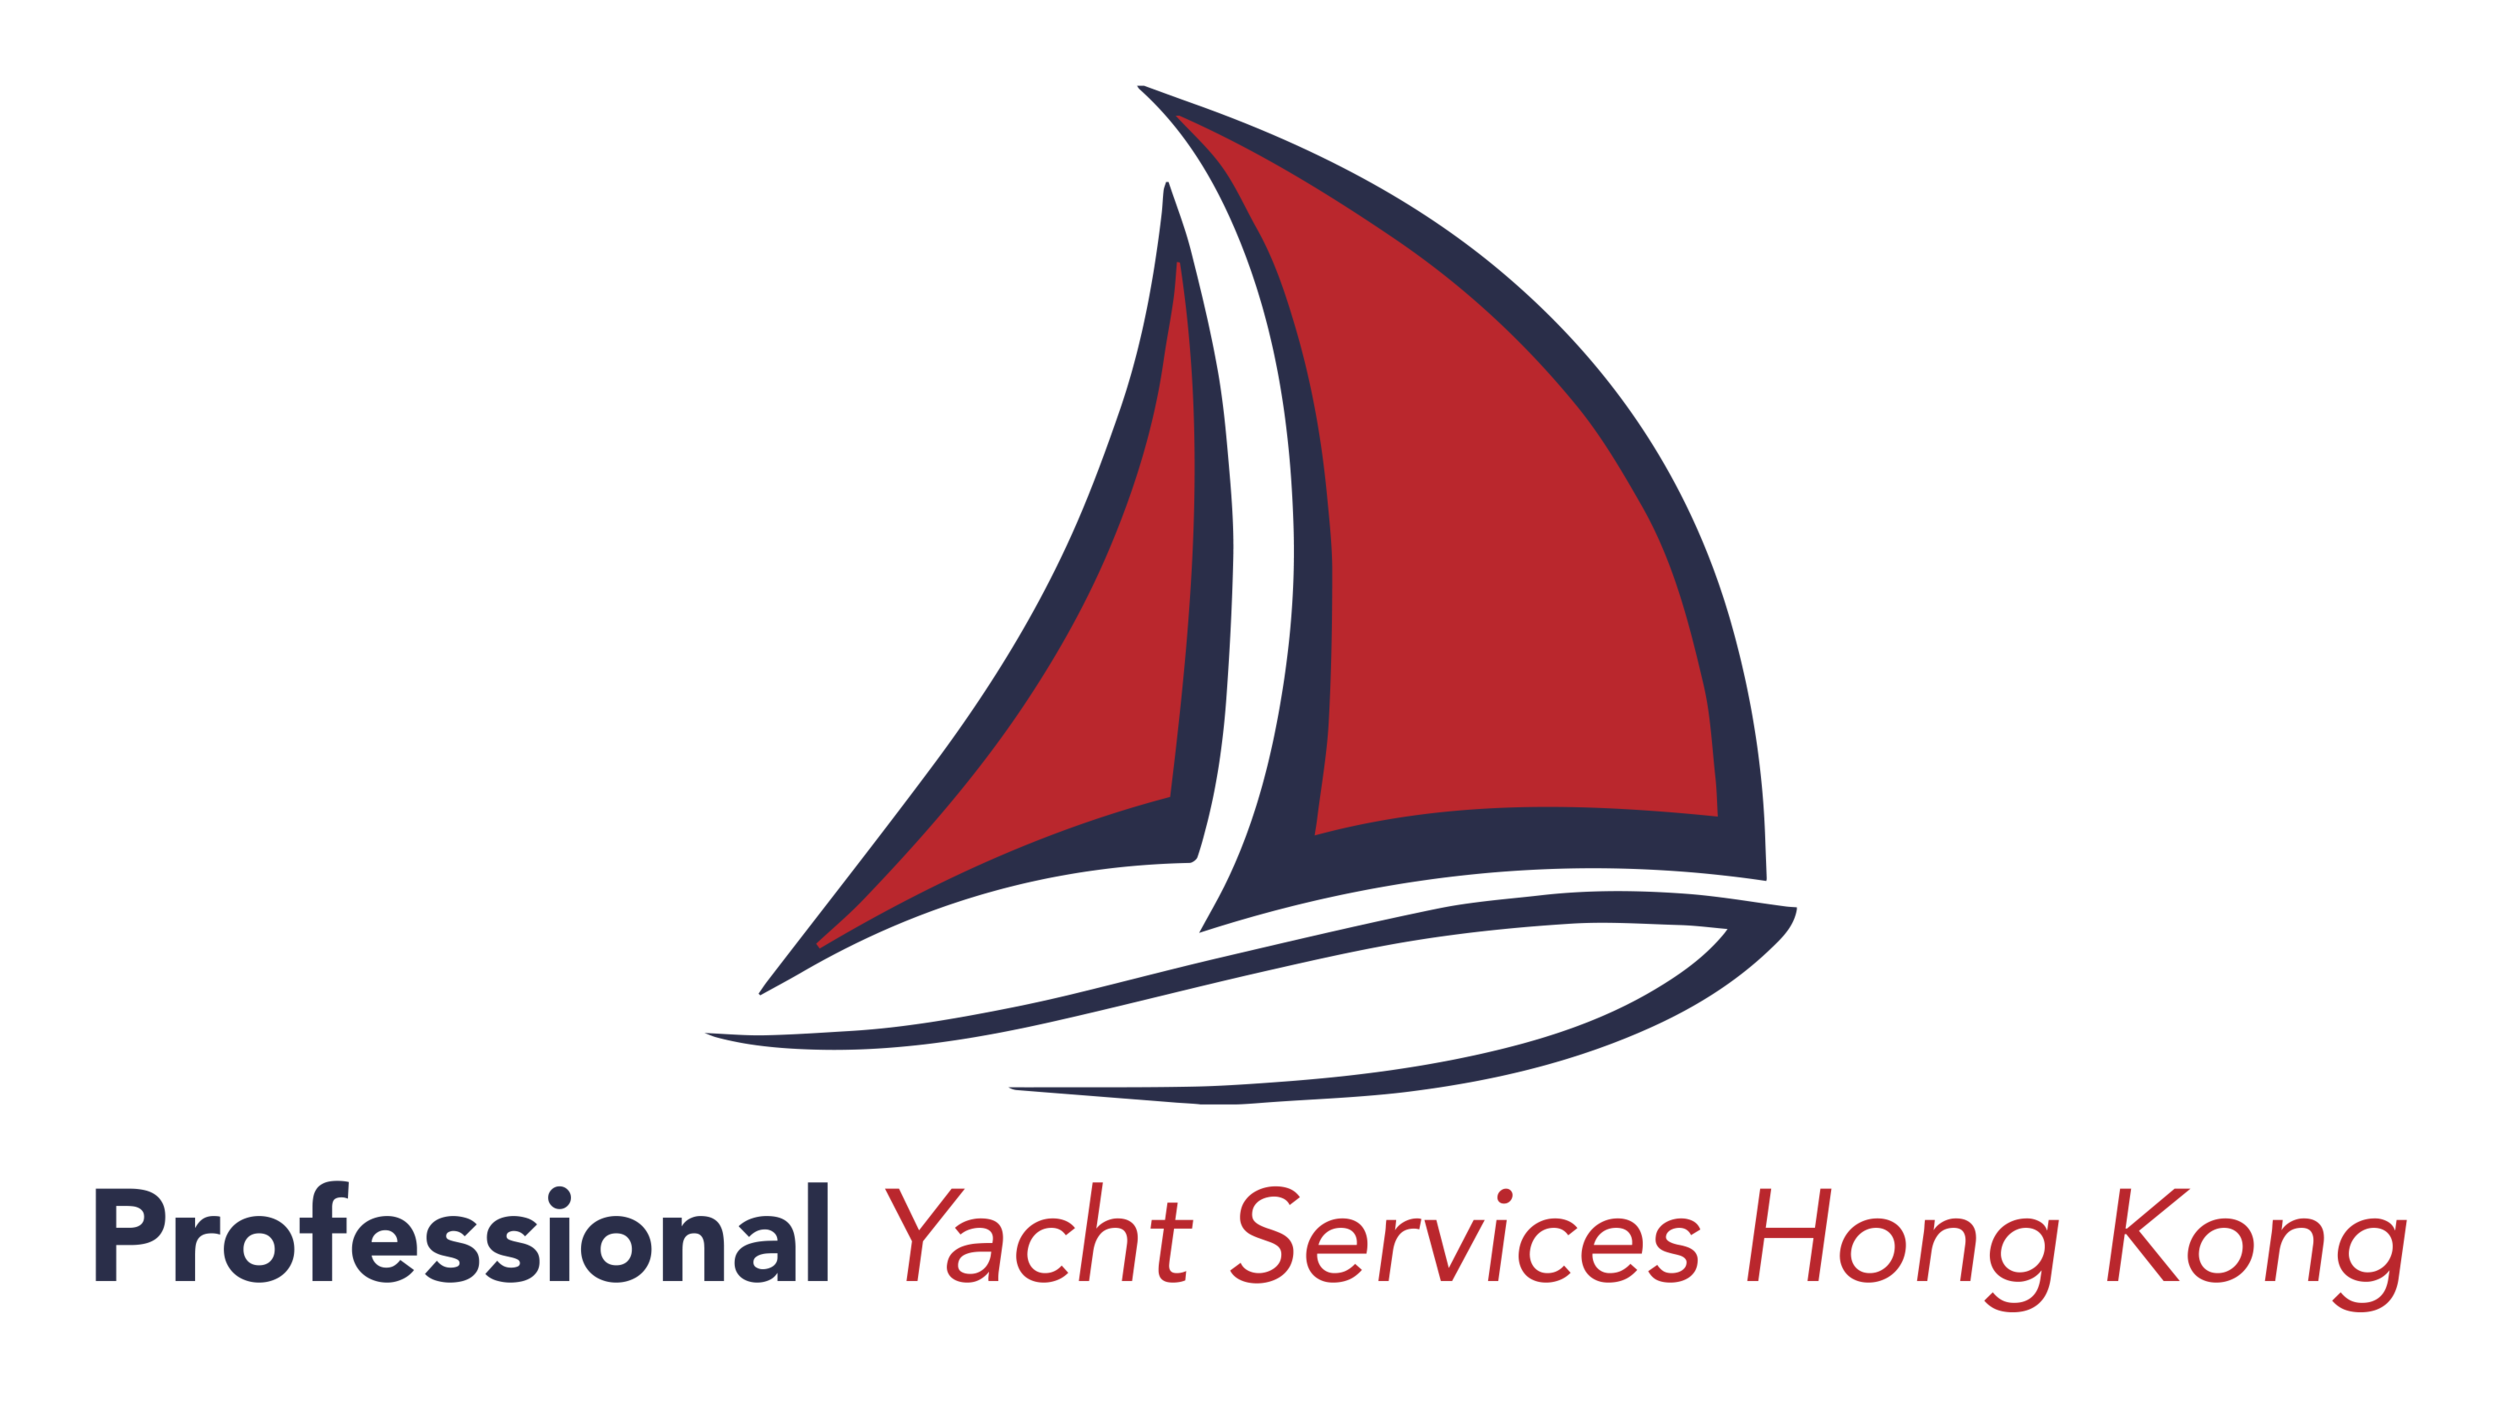 Professional Yacht Services Hong Kong